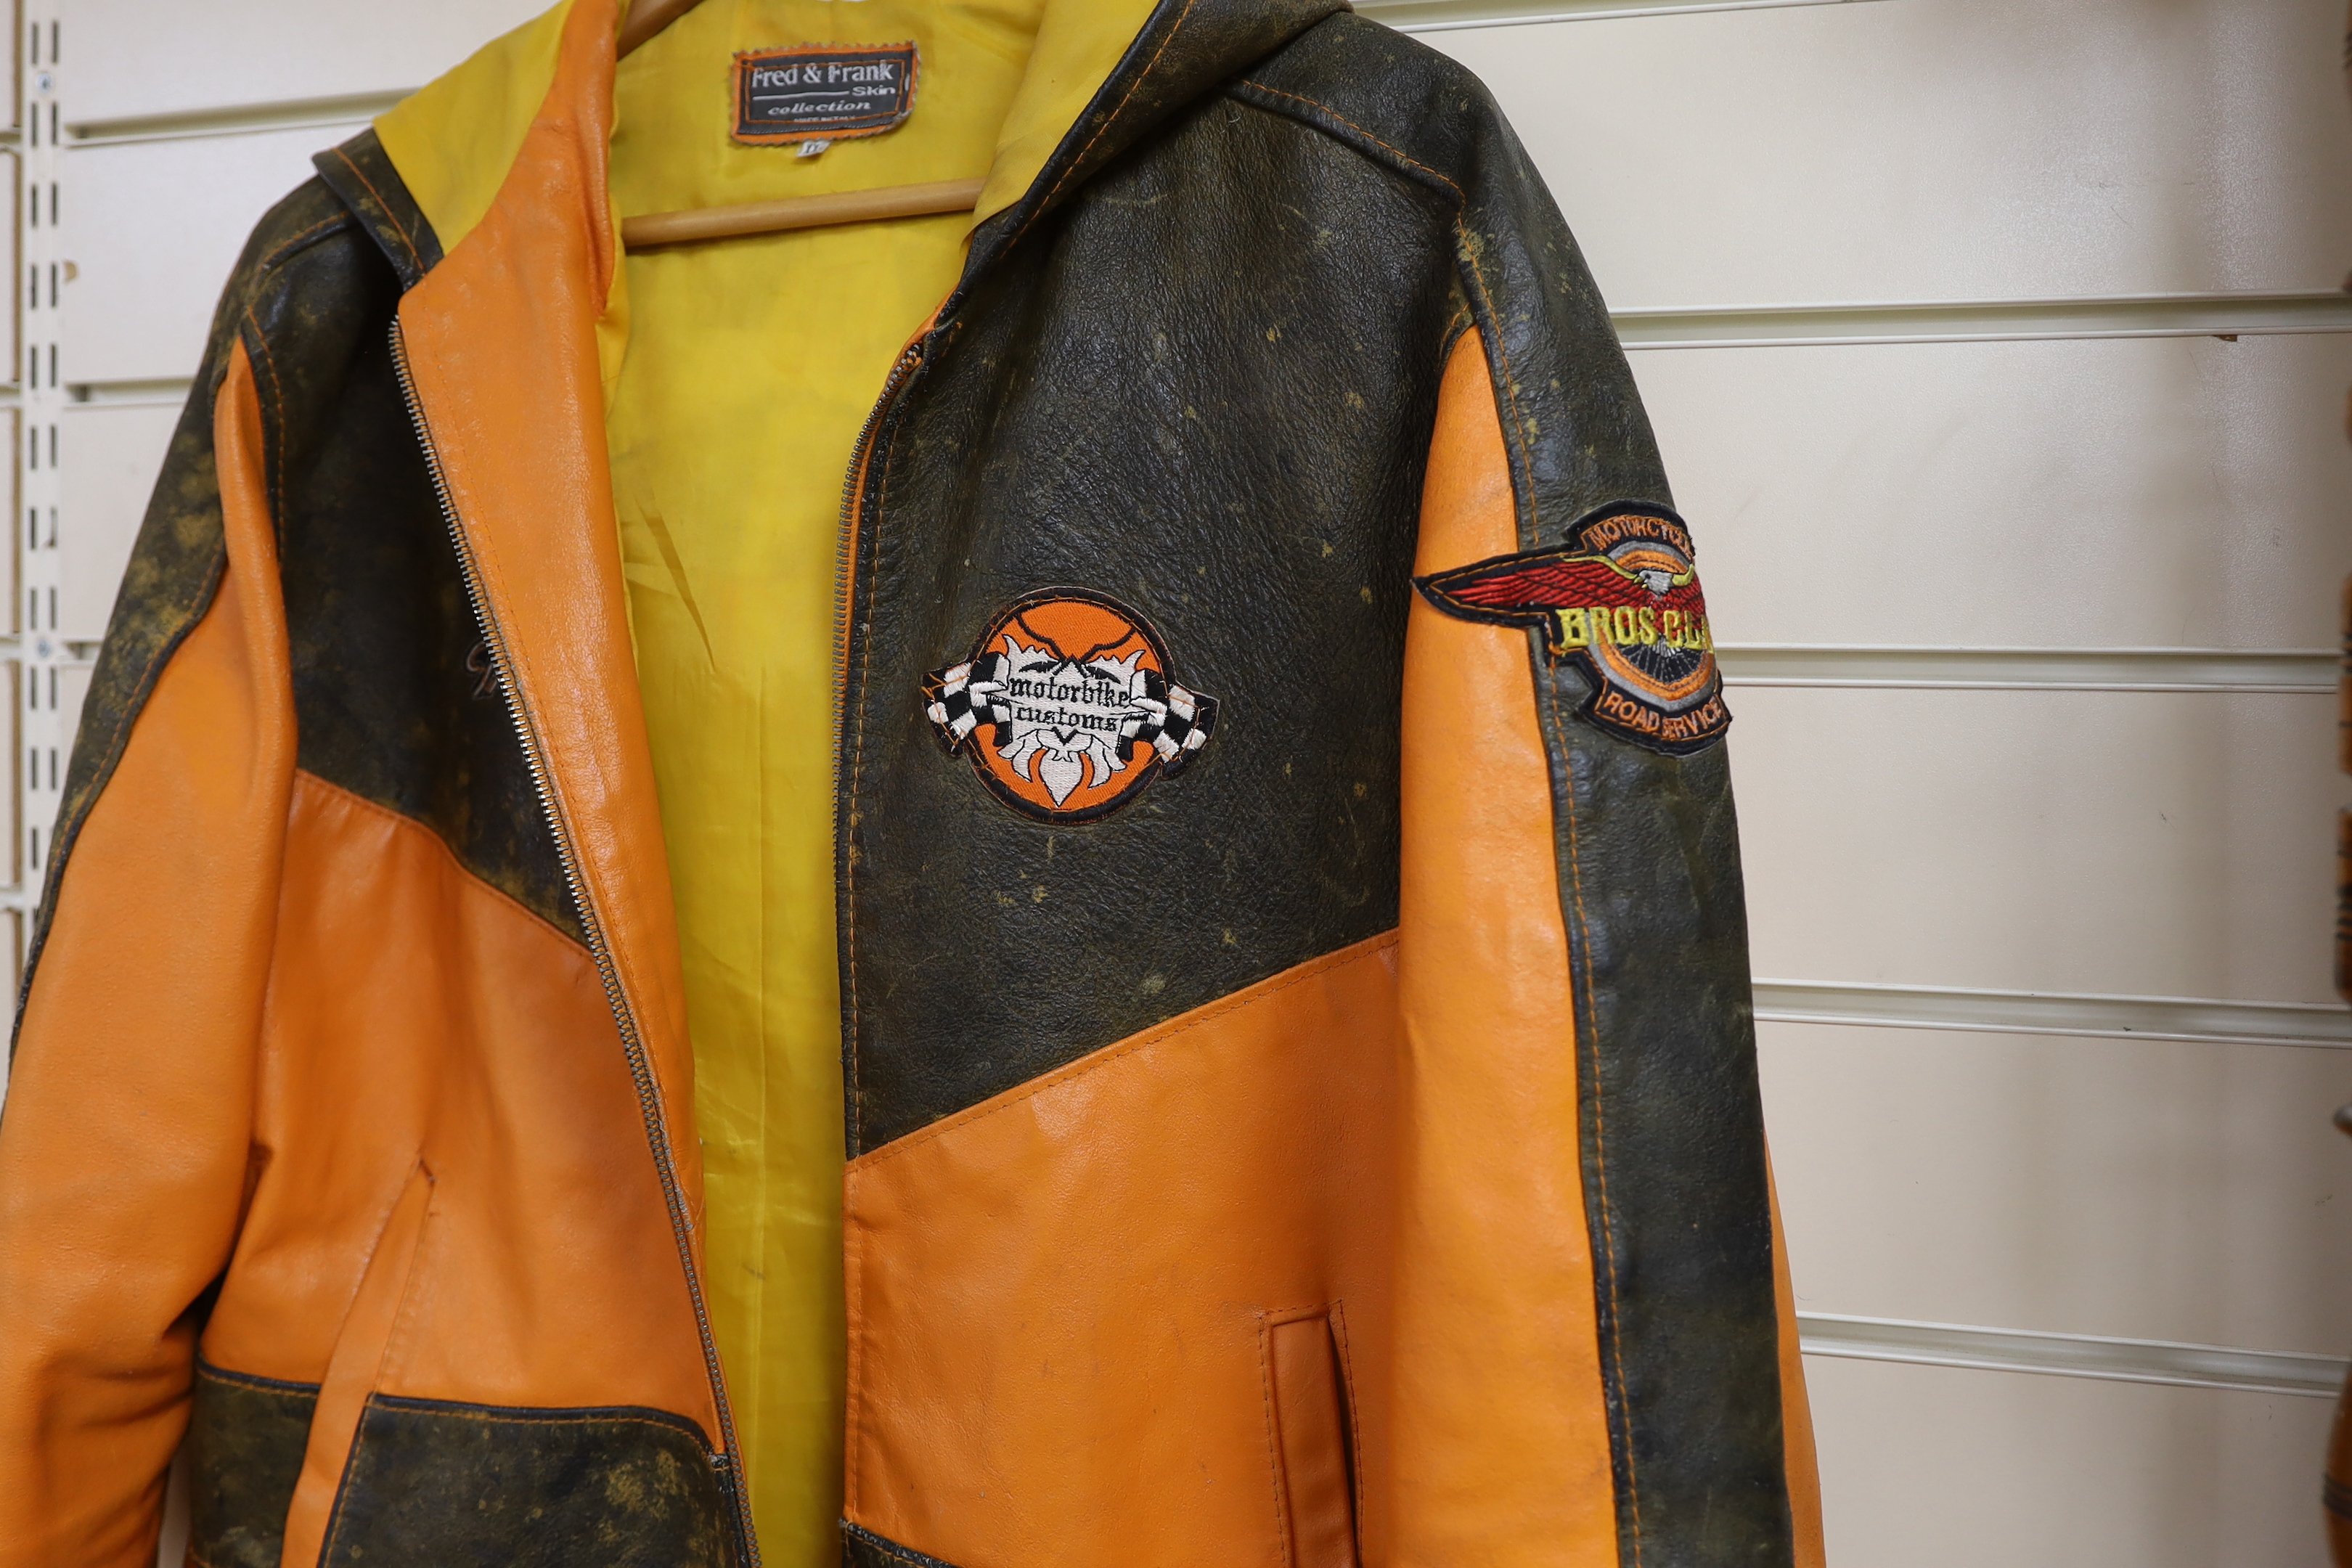 A motorcyclist's Fred & Frank leather jacket size XXL